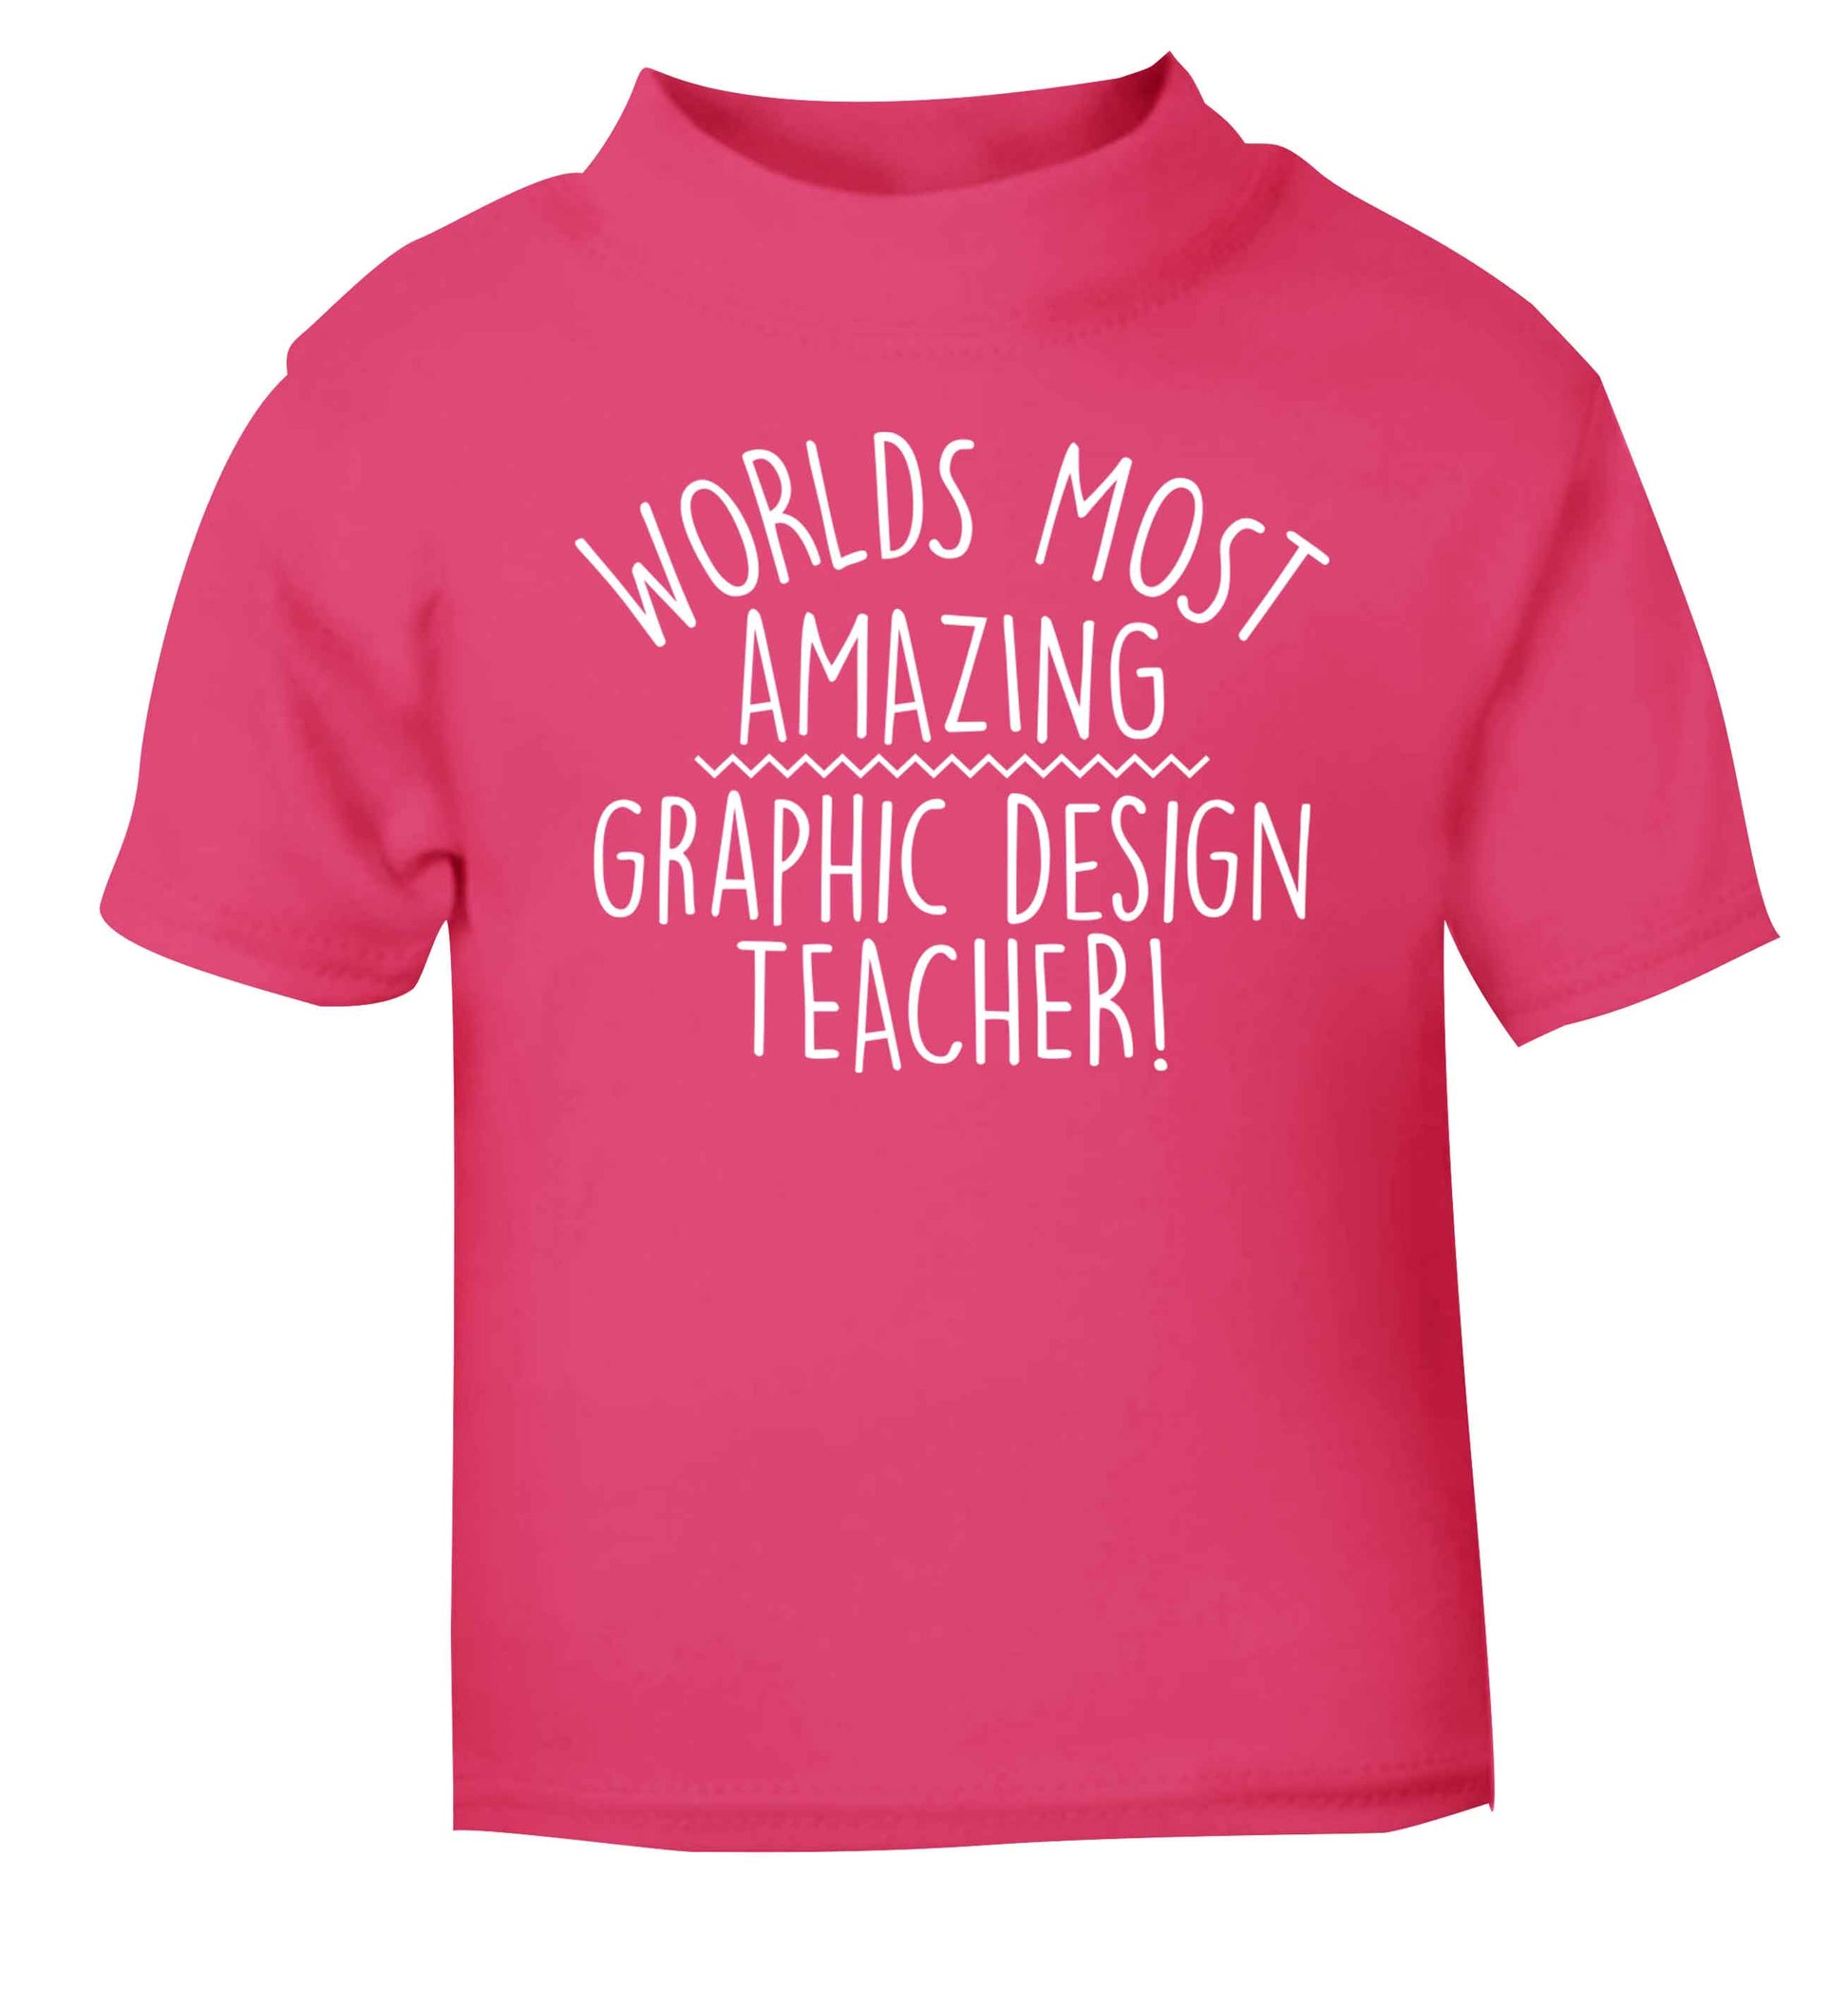 Worlds most amazing graphic design teacher pink baby toddler Tshirt 2 Years